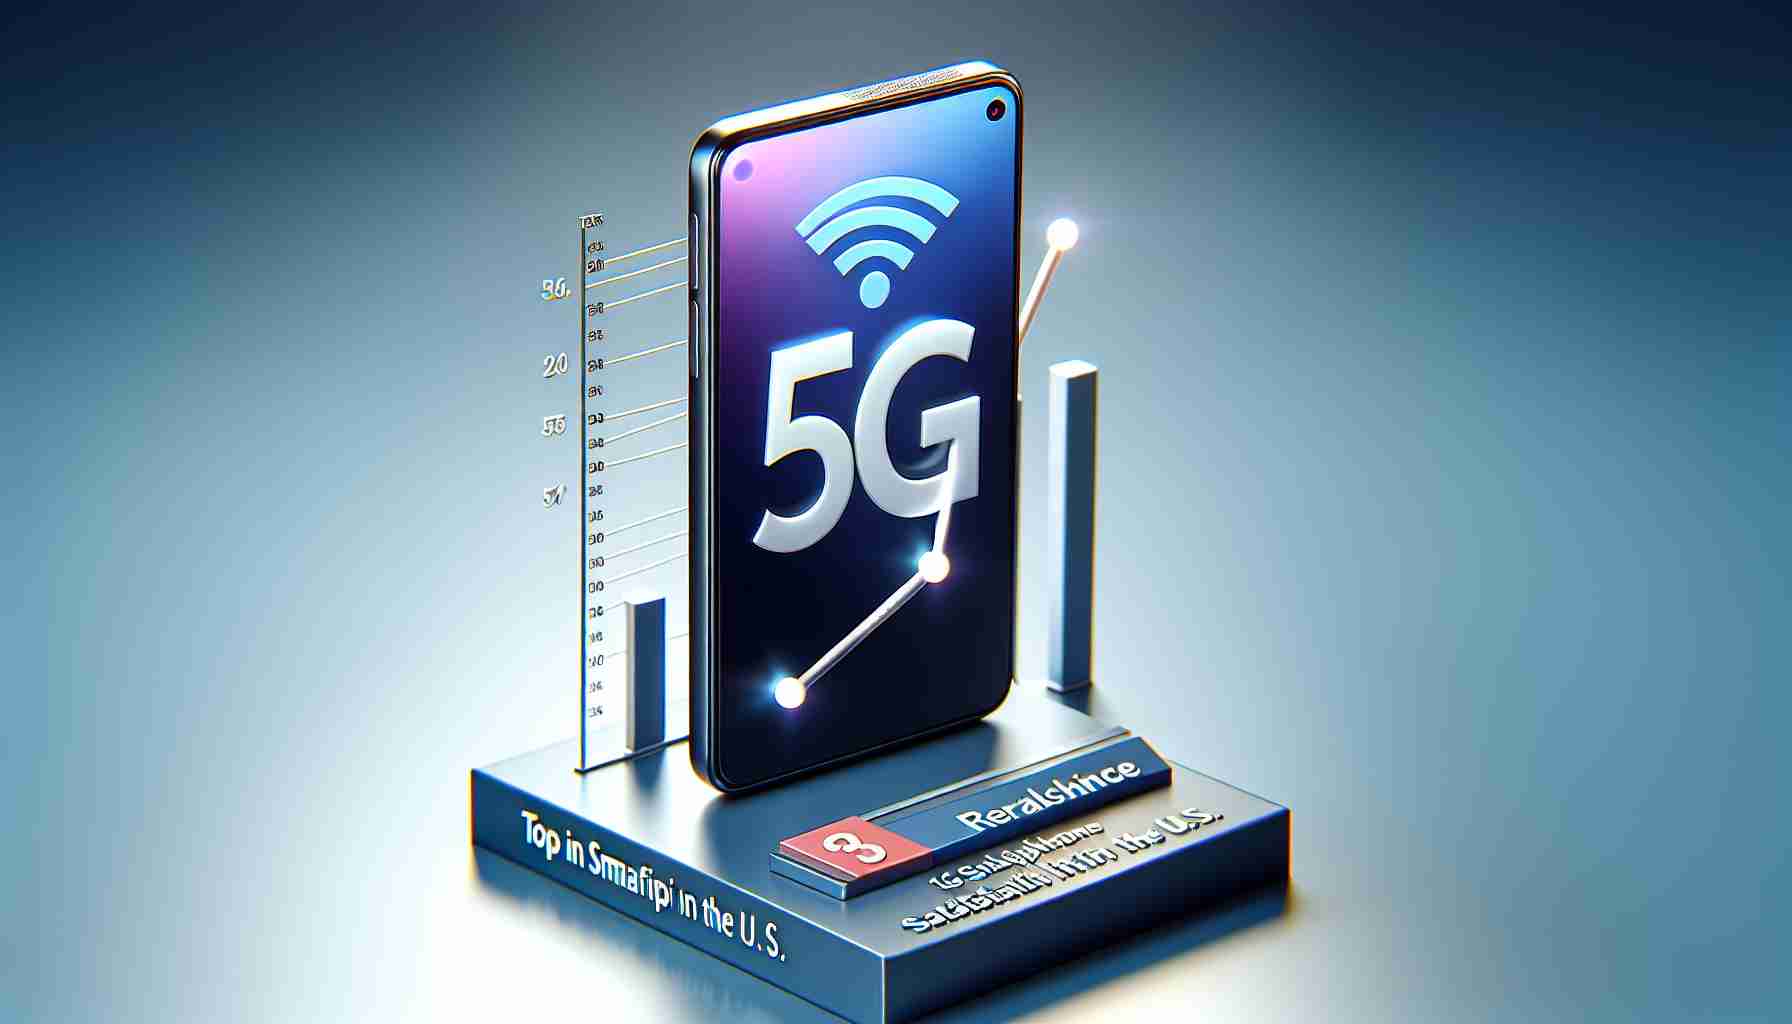 Samsung Tops 5G Smartphone Satisfaction Rankings in the U.S.